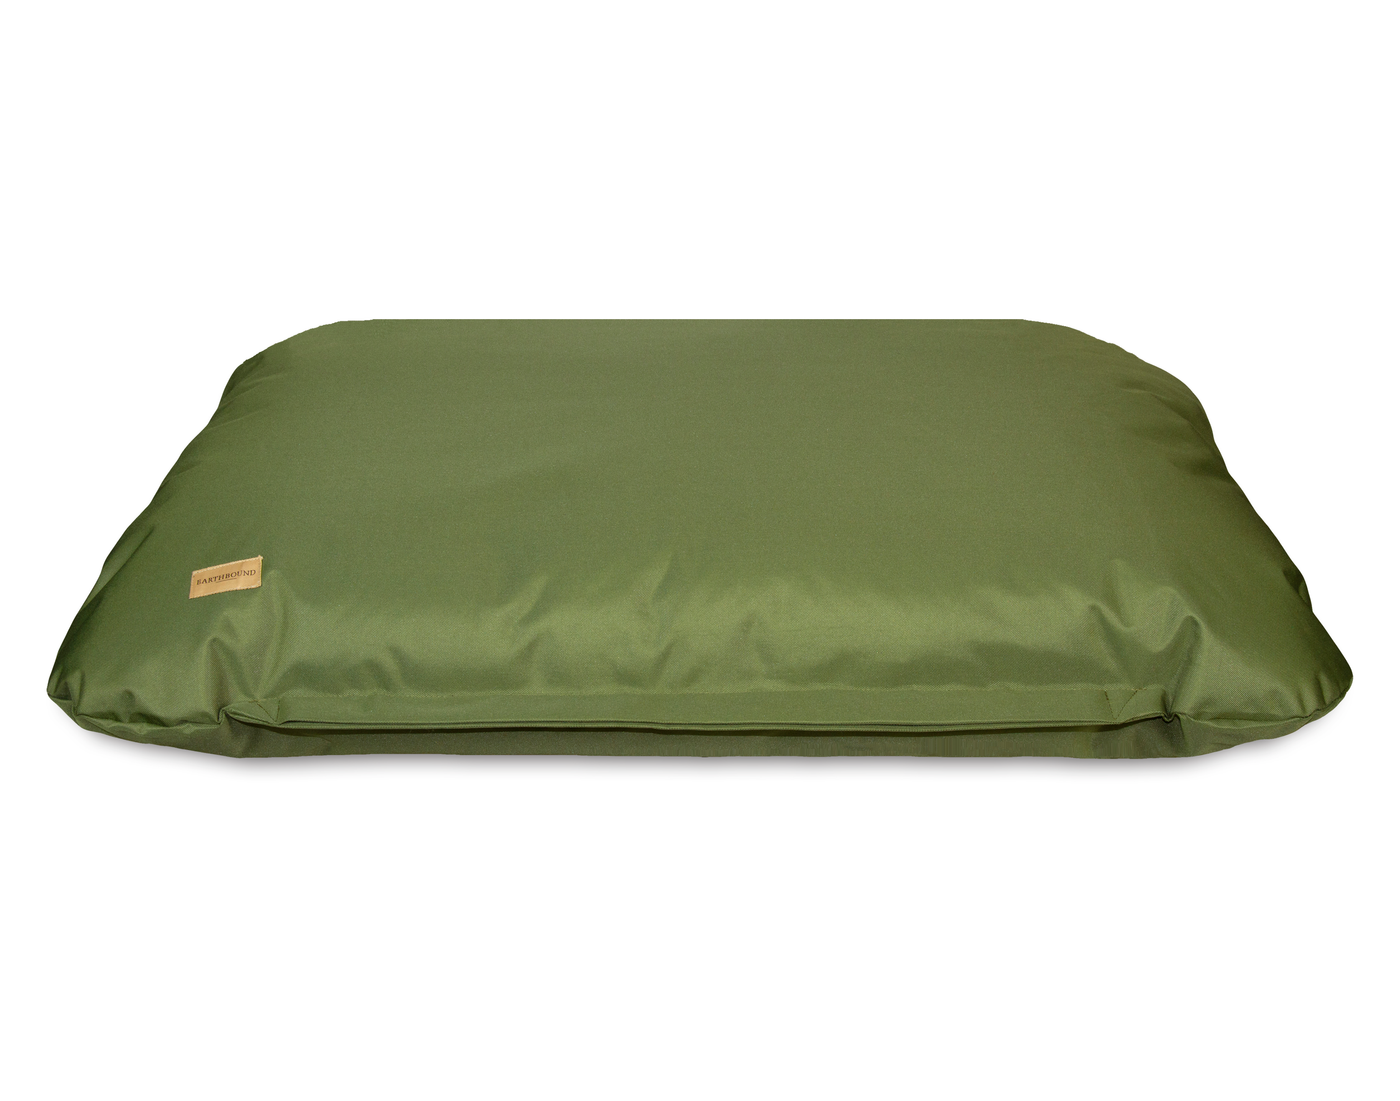 Flat Cushion Waterproof Green